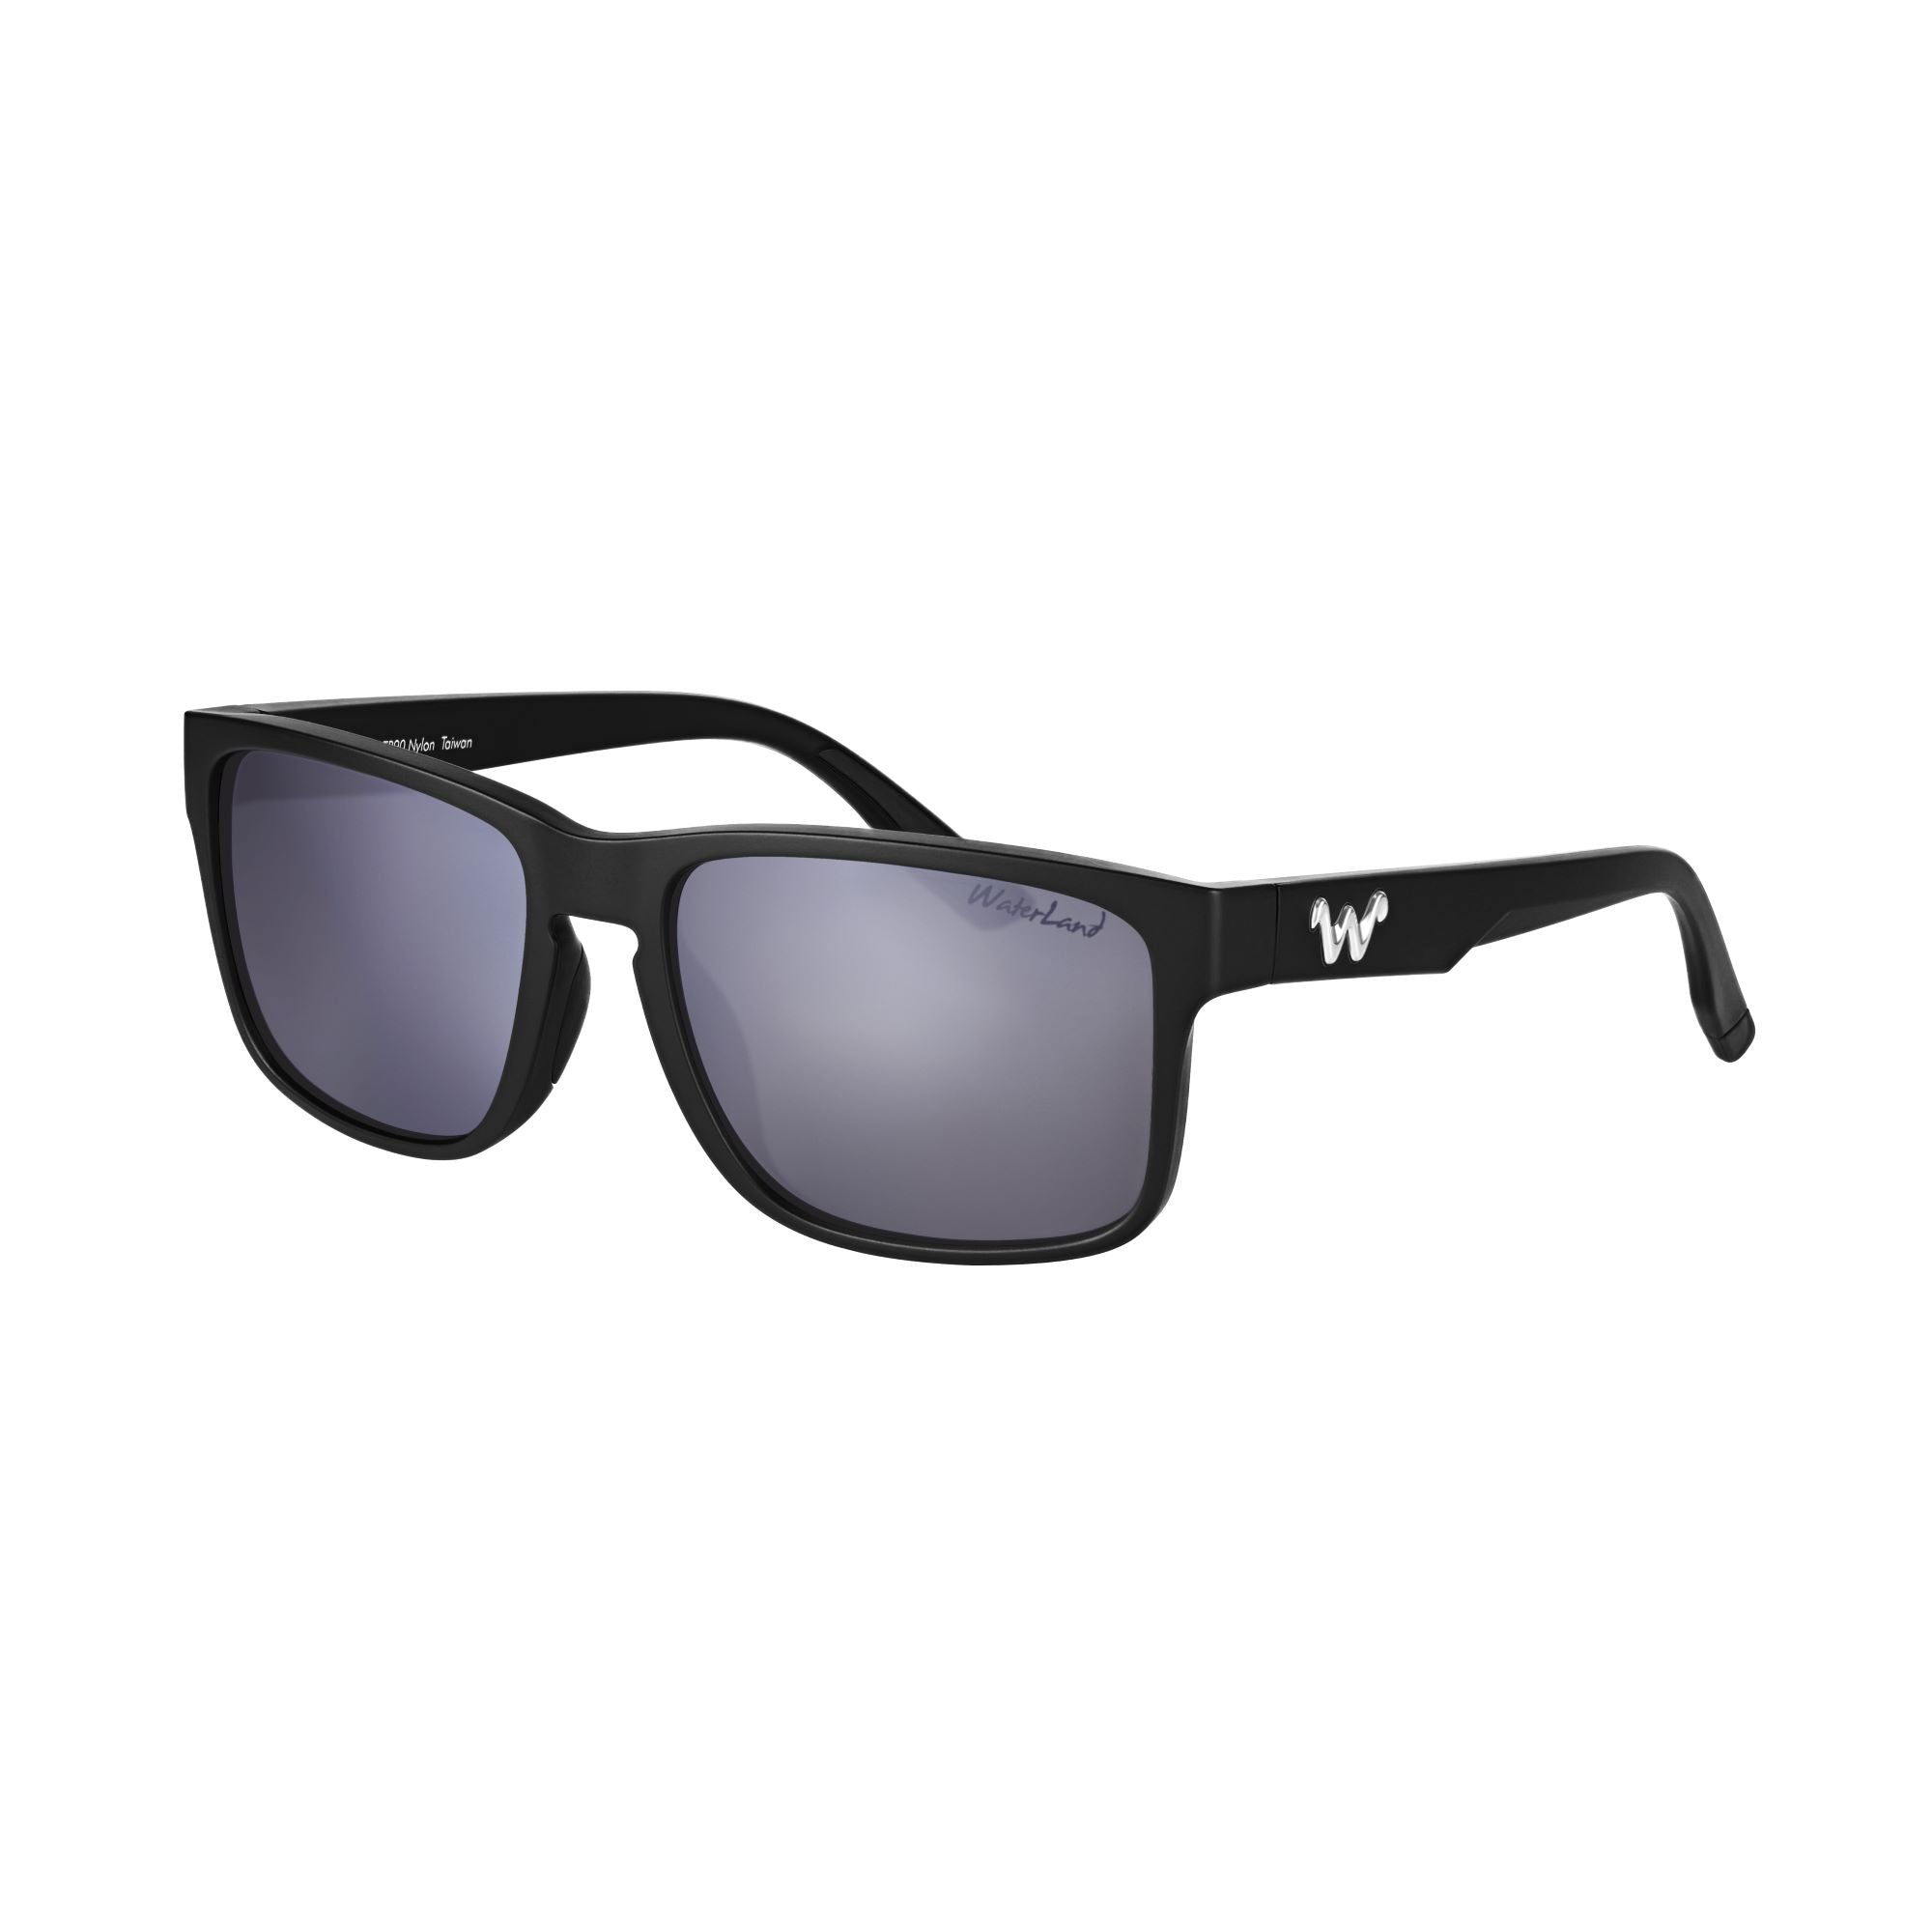 Waterland Sobro Polarized Sunglasses, Black/Silver